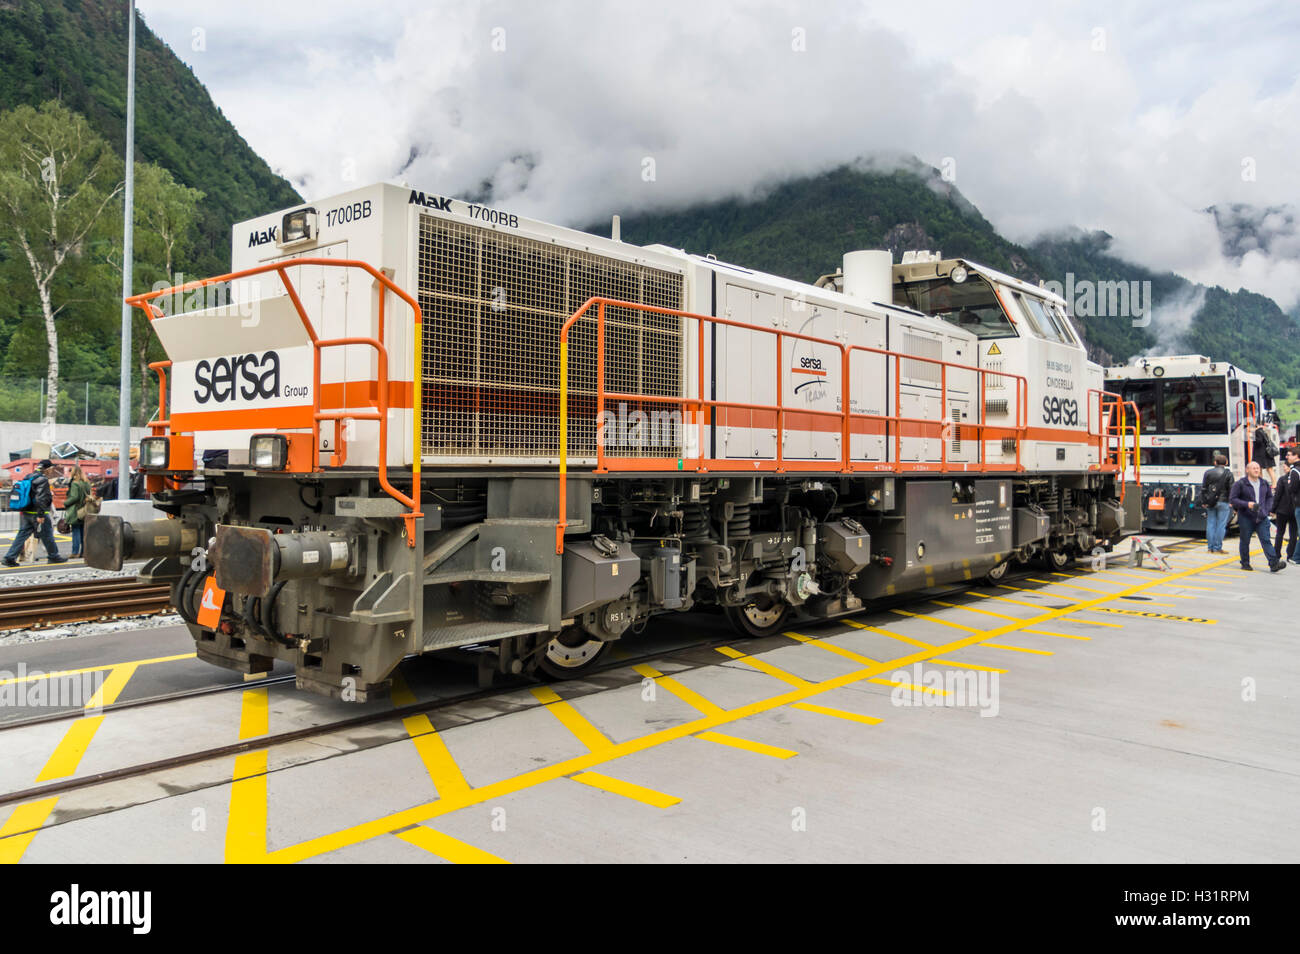 Vossloh MaK G1700 BB / Am 843 diesel-hydraulic locomotive operated by Swiss railway construction company Sersa Group. Stock Photo